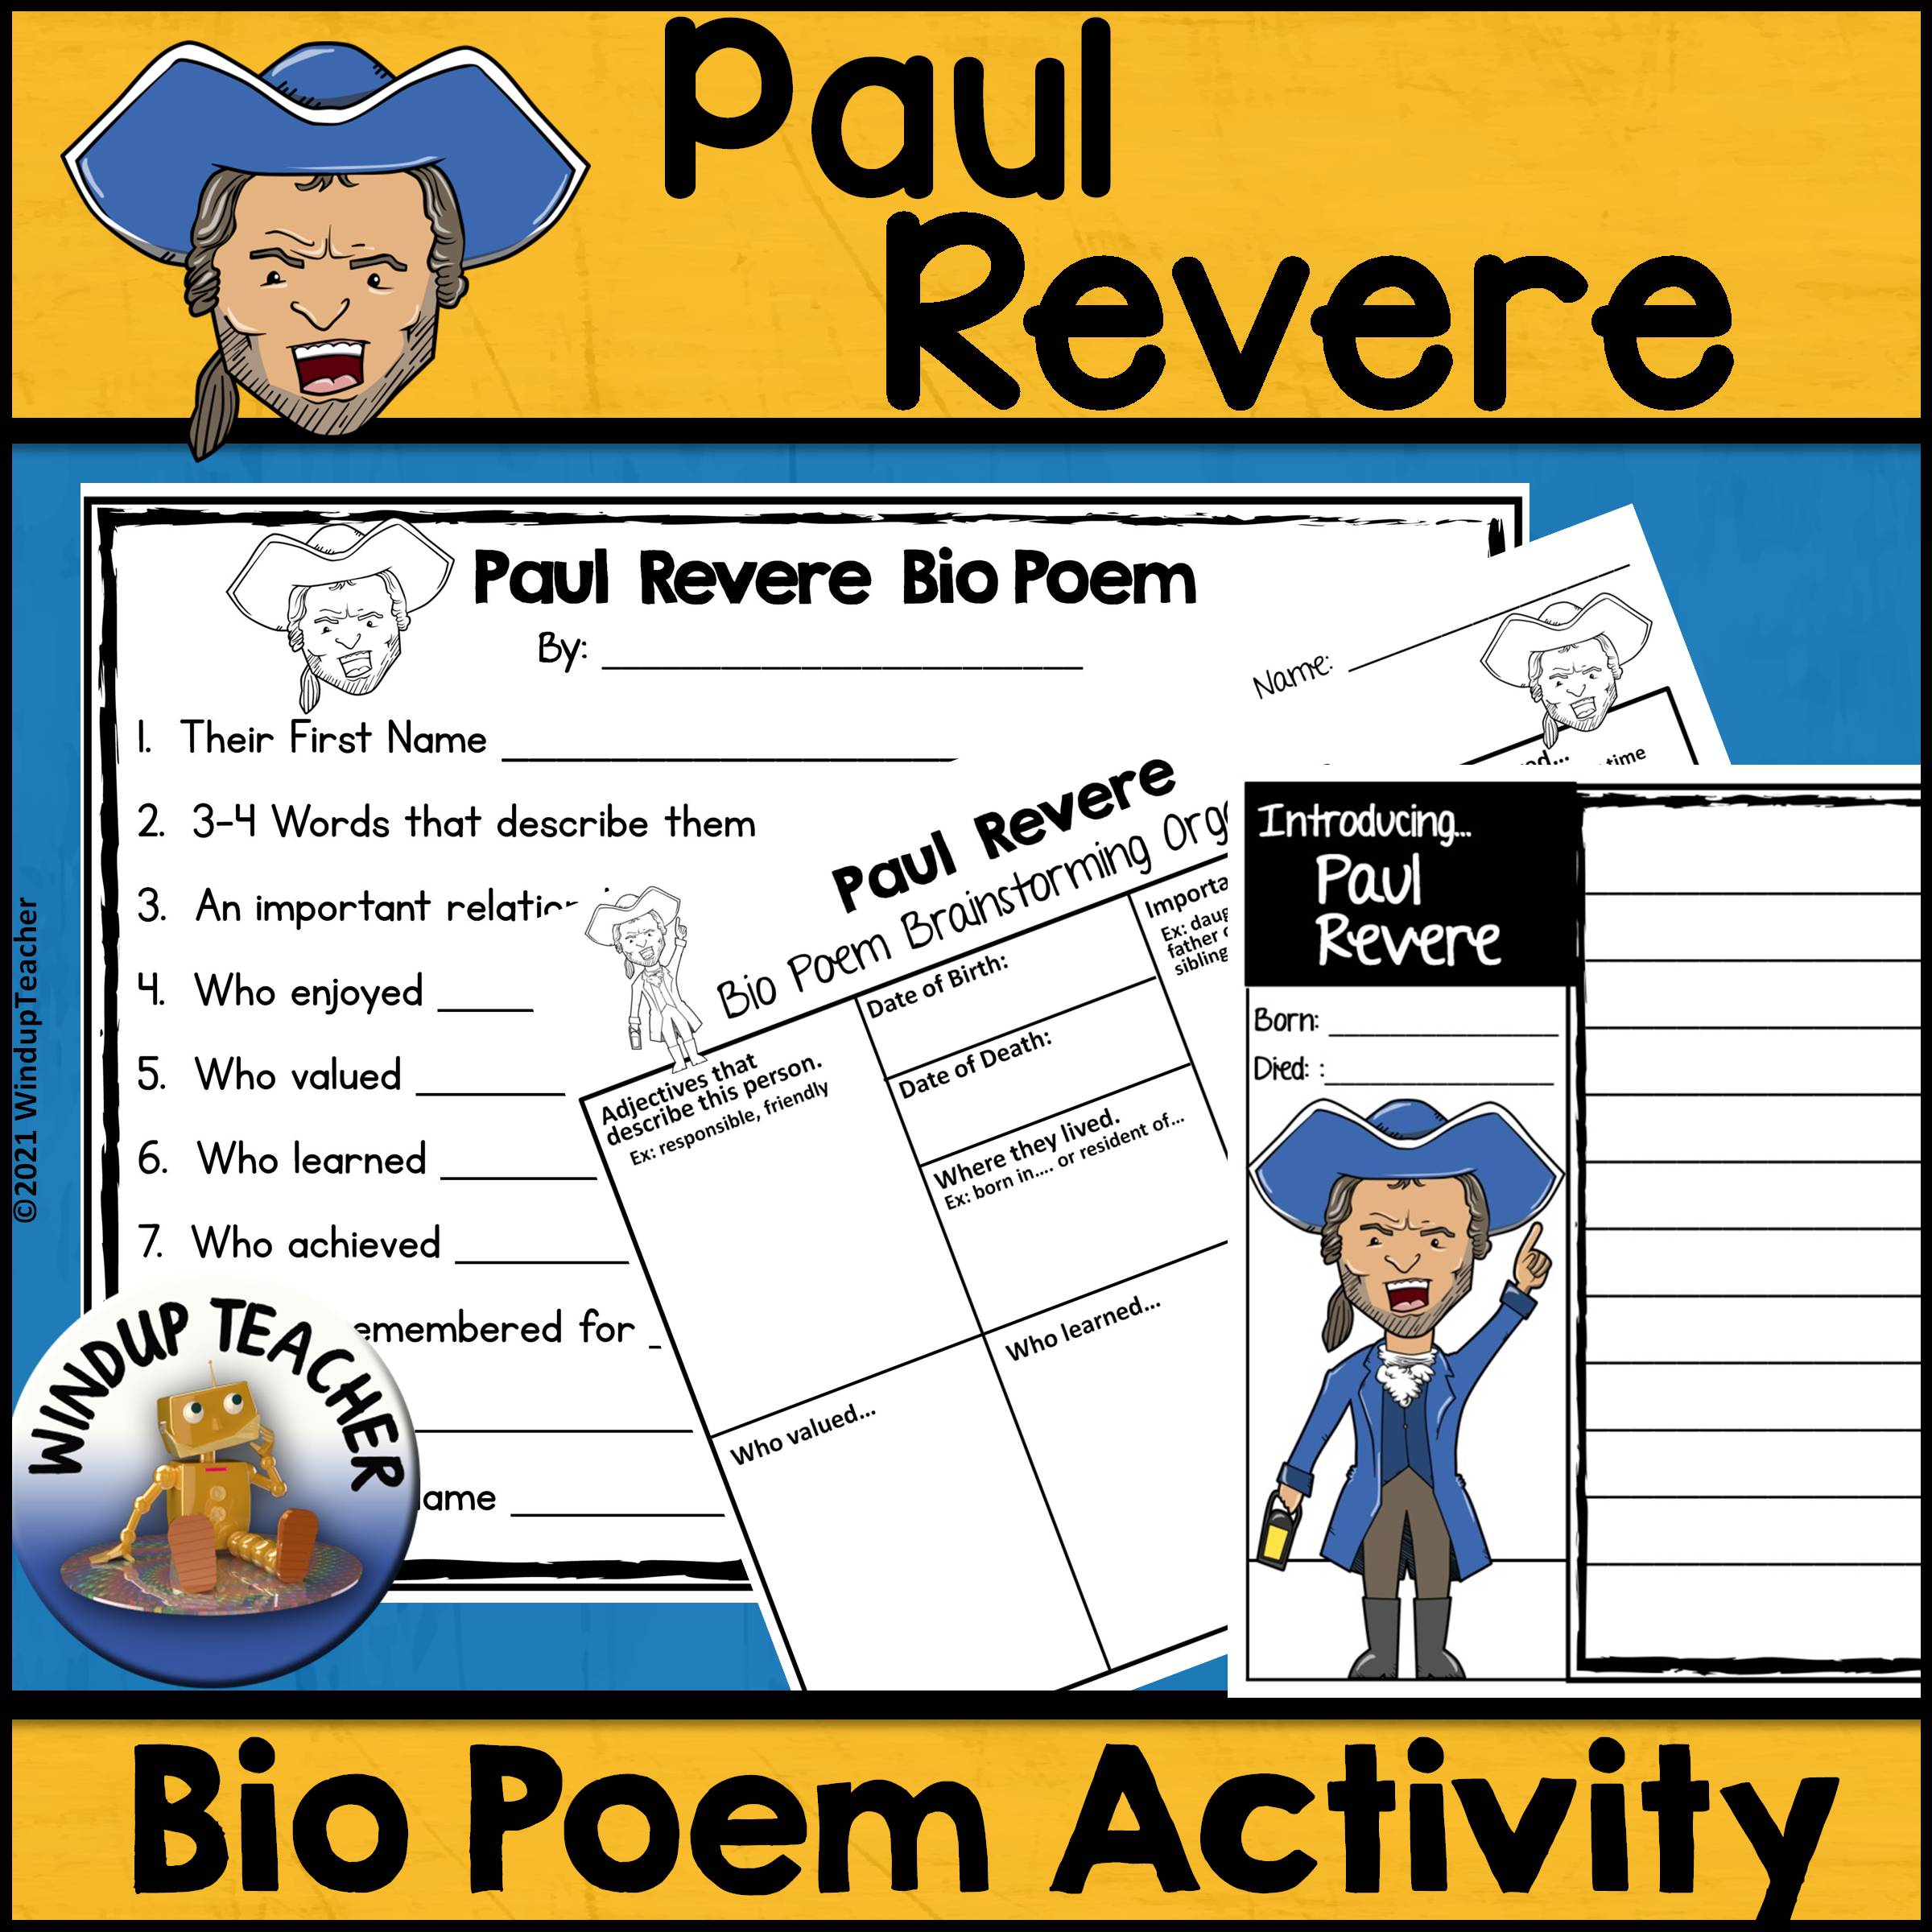 Paul Revere Poem Writing Activity